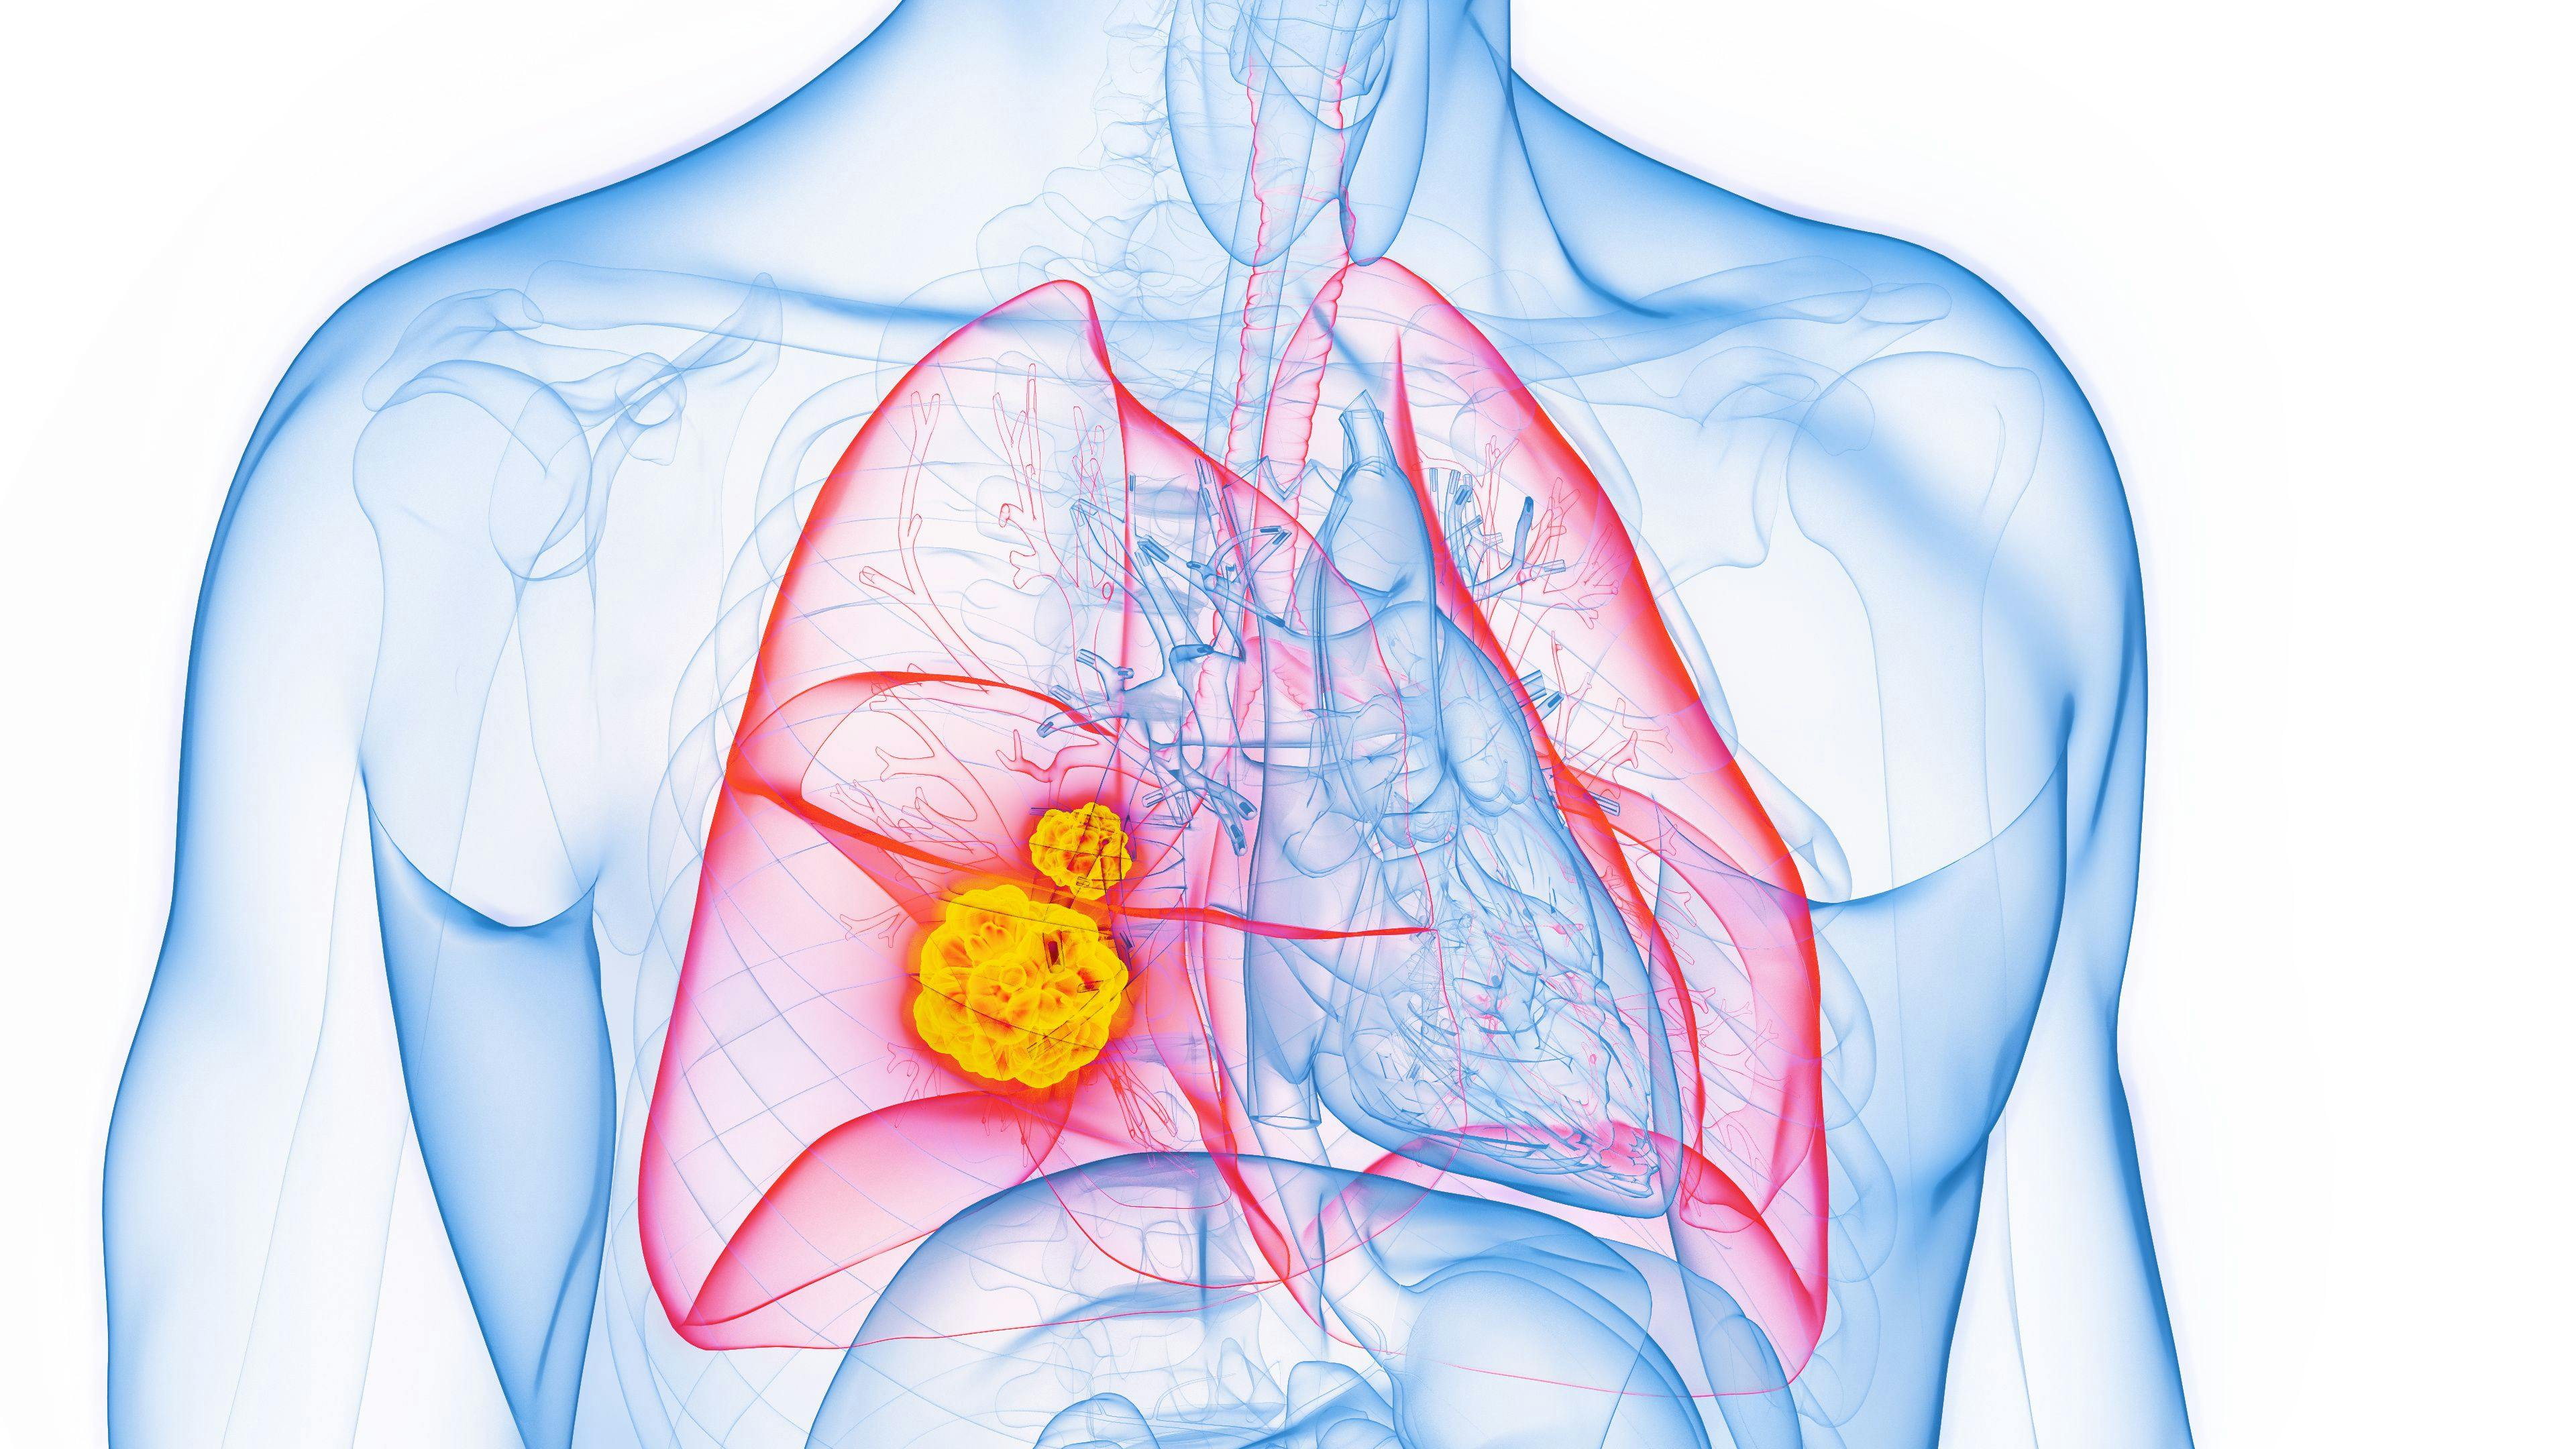 3D rendered medical illustration of male anatomy with lung cancer:© Sebastian Kaulitzki- stock.adobe.com